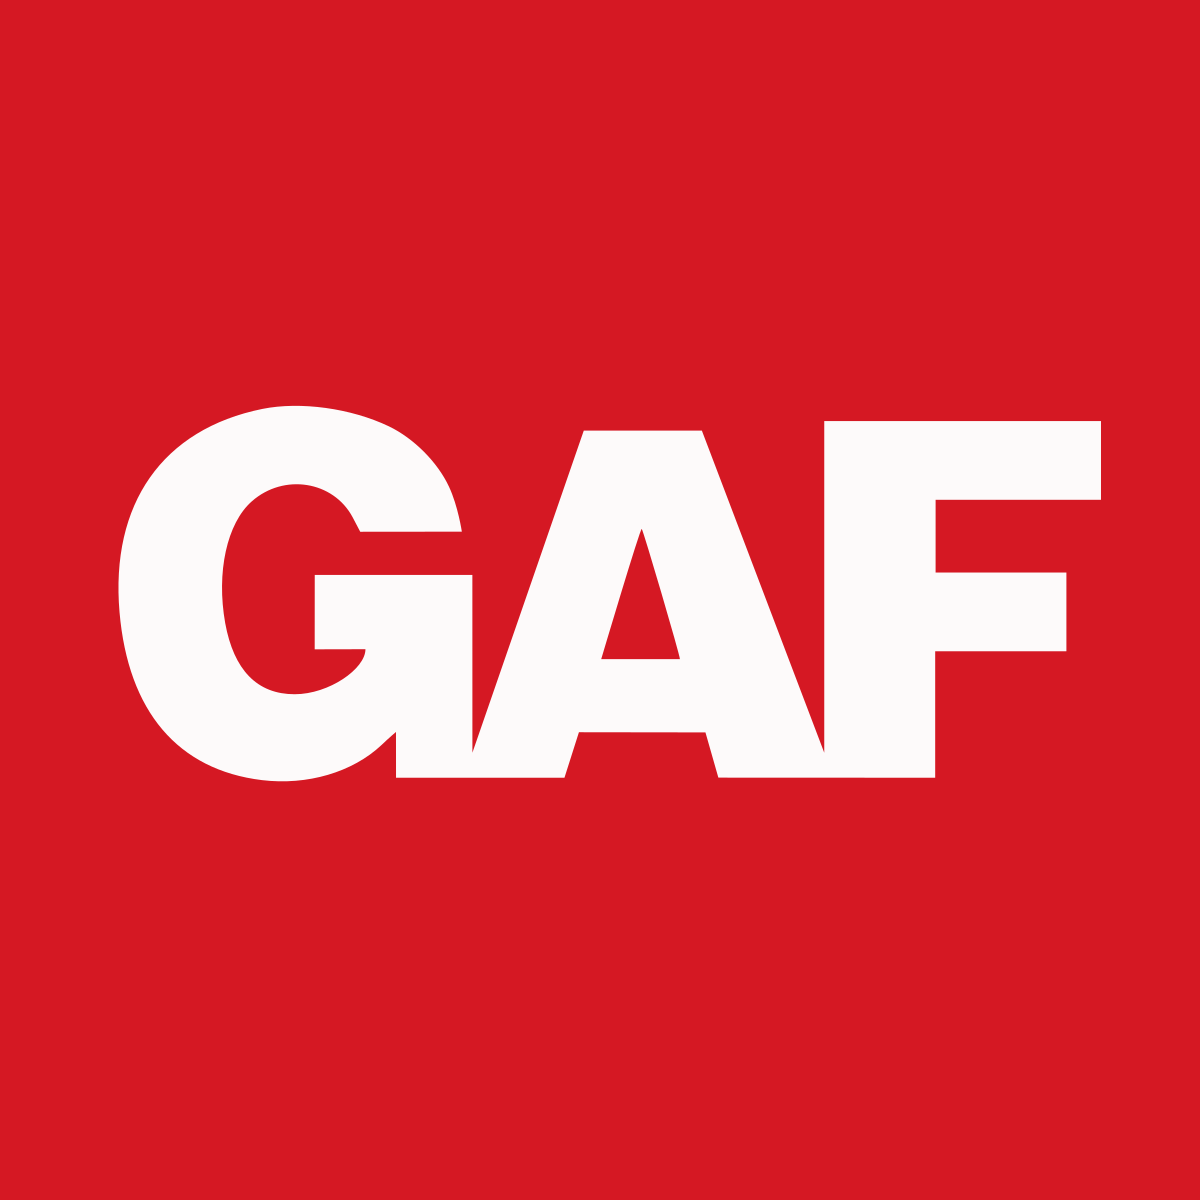 GAF is a reputable manufacturer